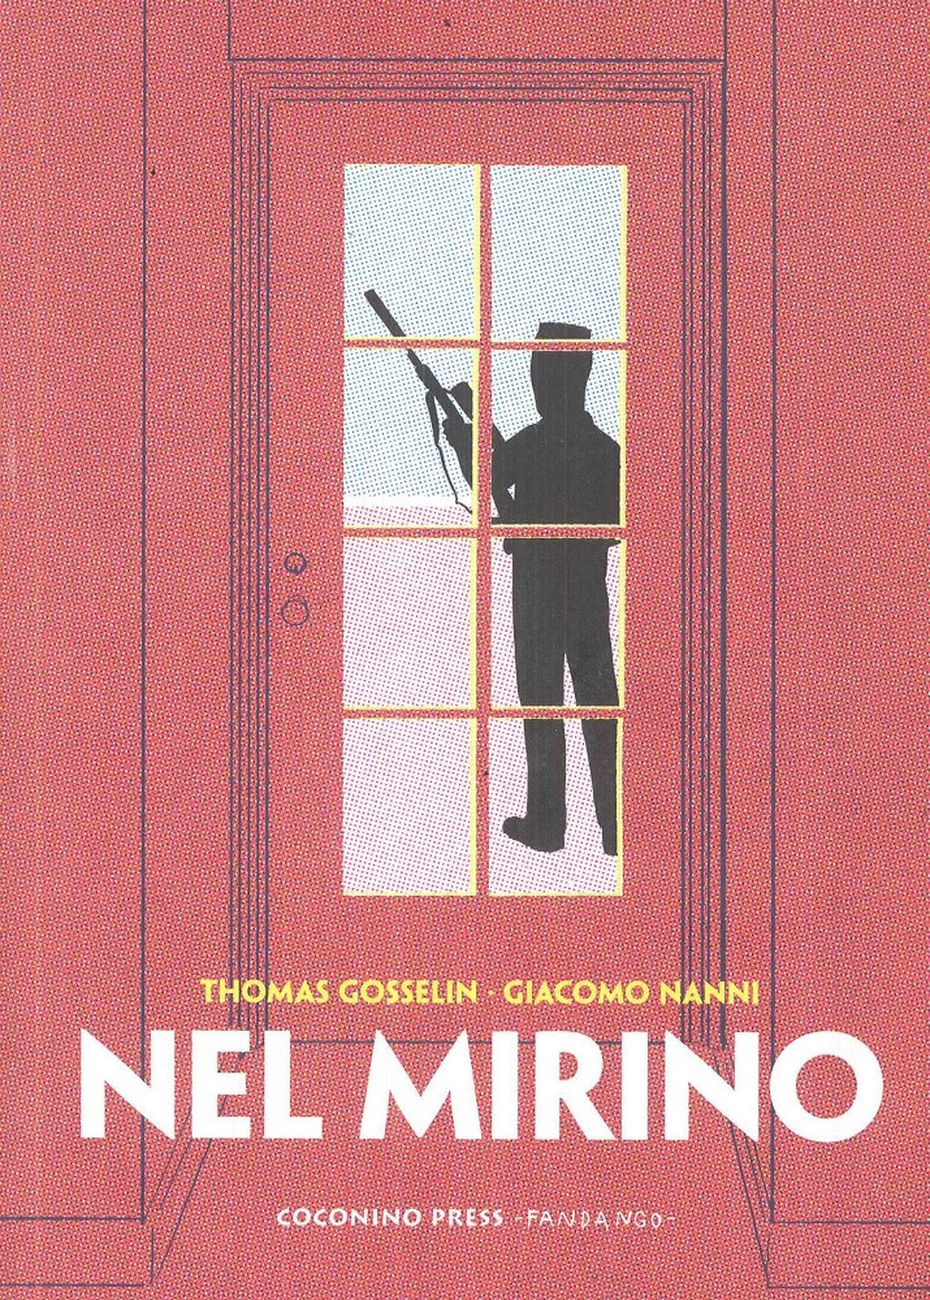 Thomas Gosselin & Giacomo Nanni Nel mirino (Coconino Press, 2019)